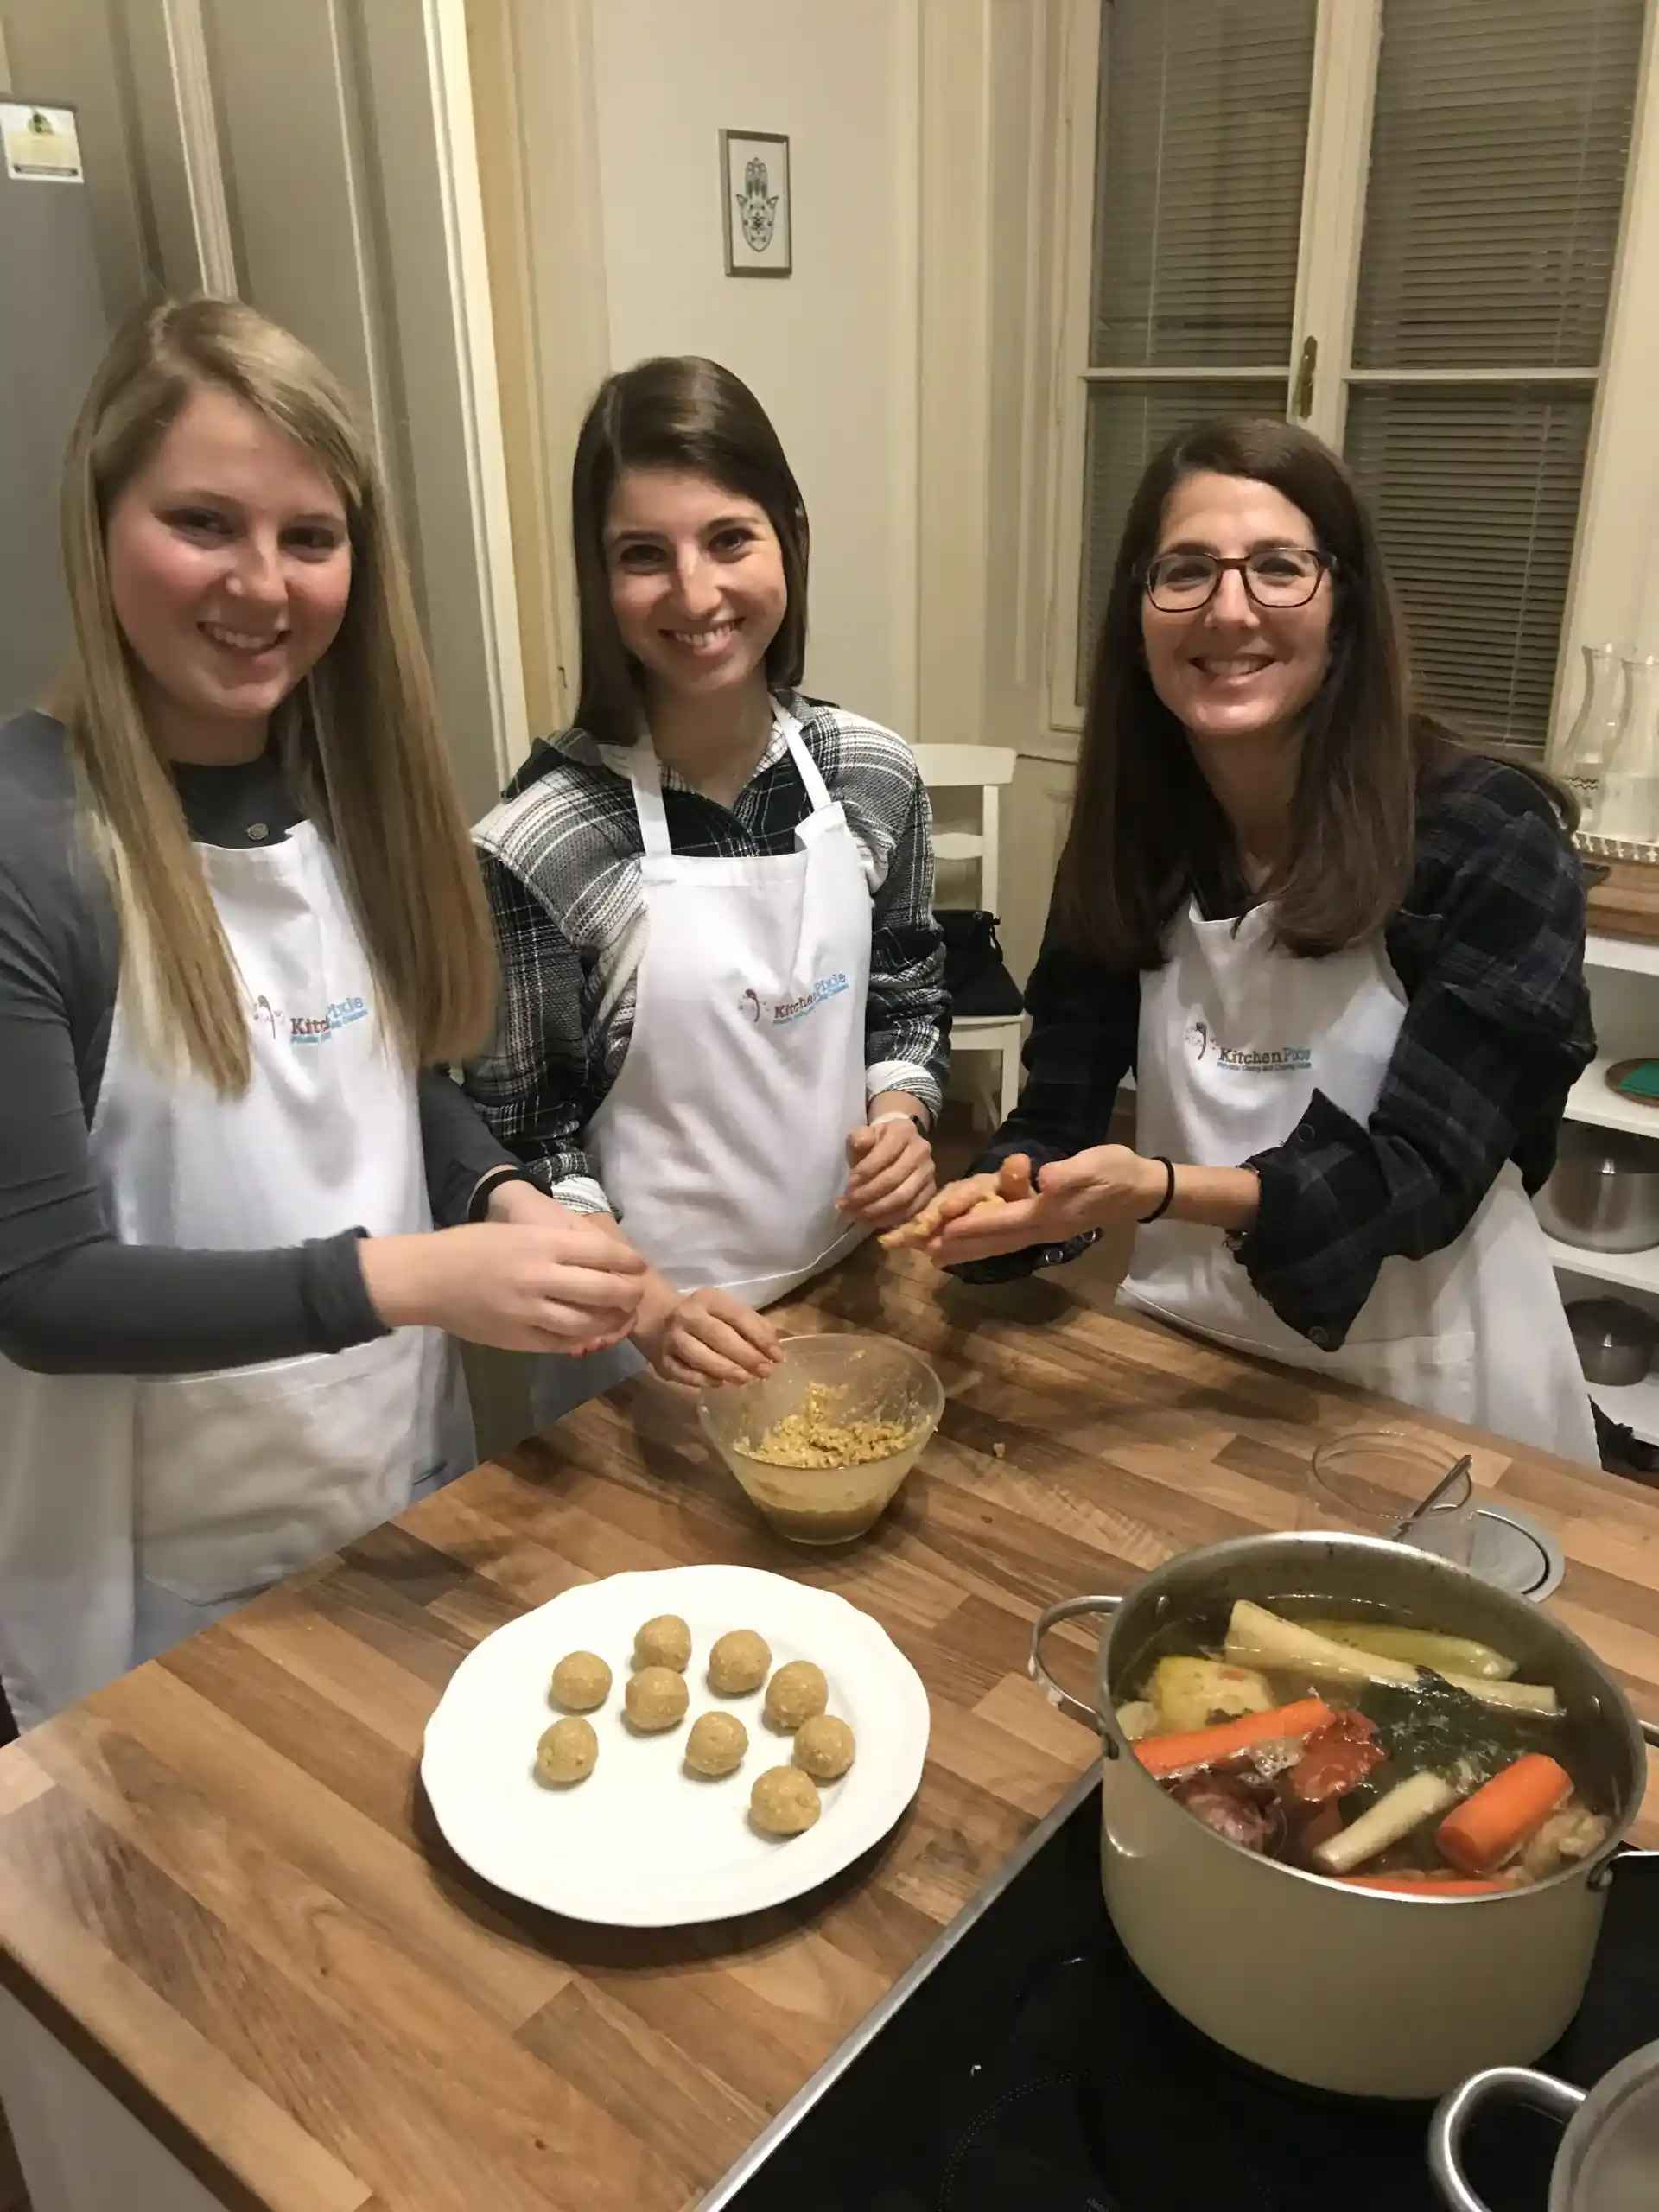 Authentic Jewish matzo soup making with girls